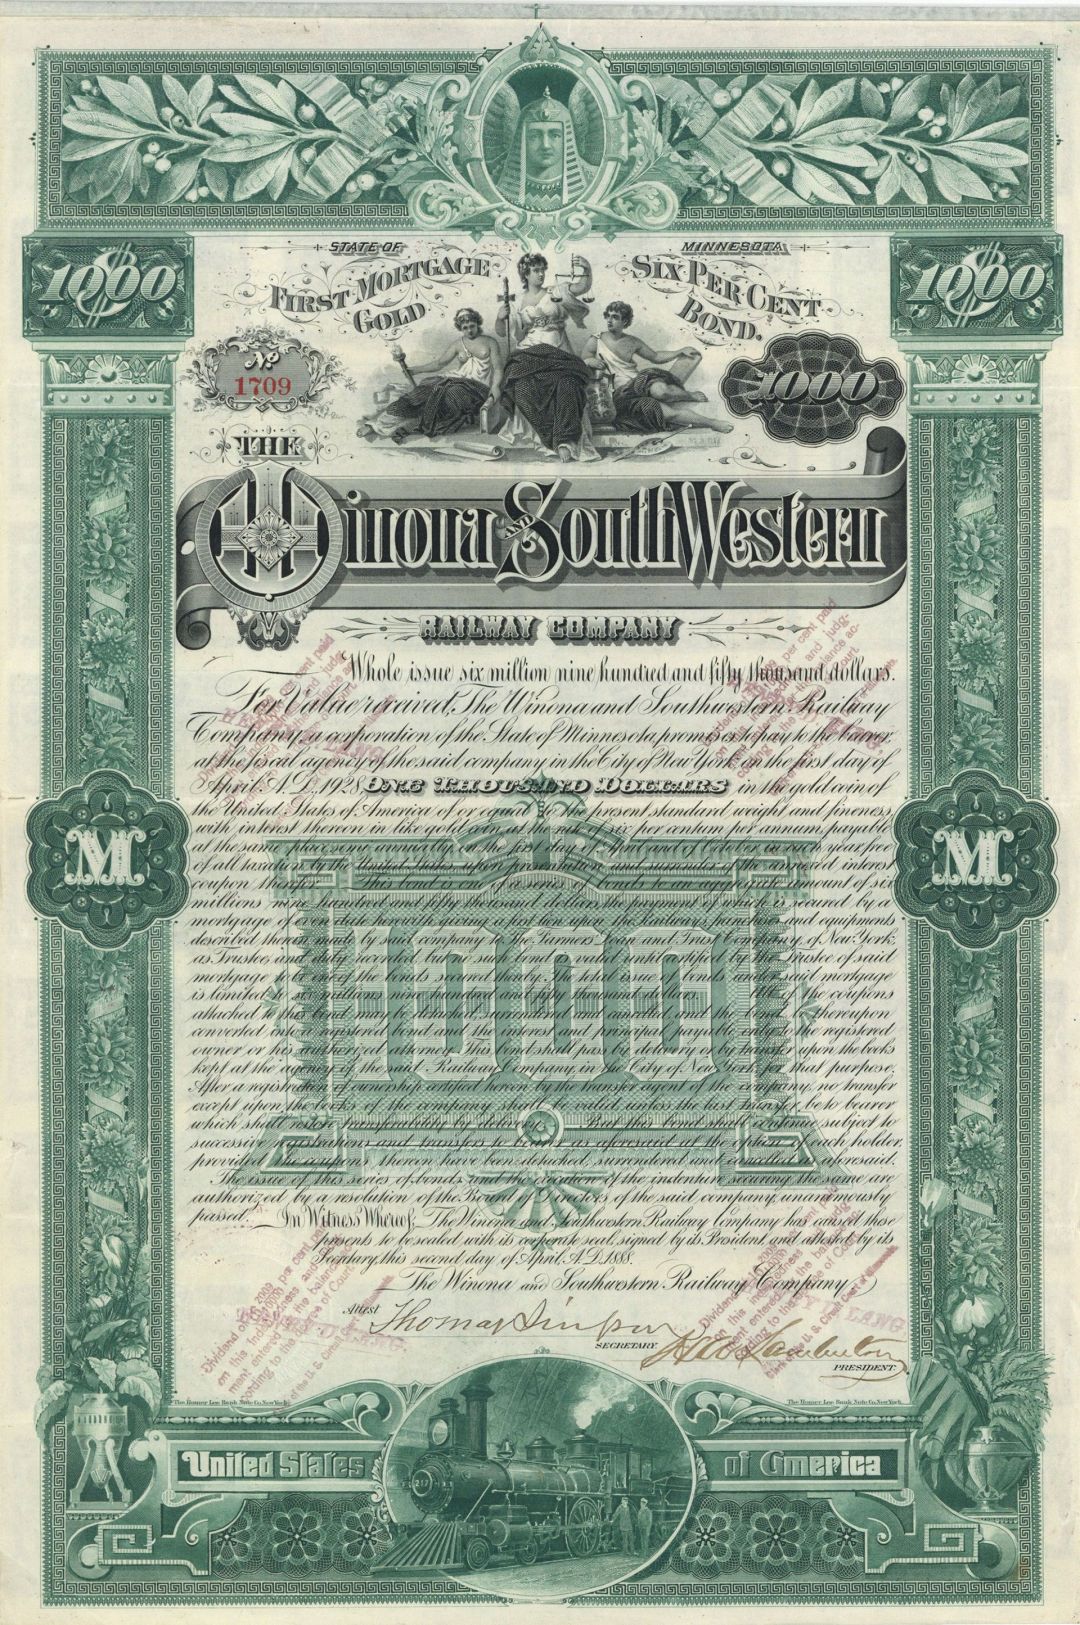 Winona and Southwestern Railway Co. - 1888 dated $1,000 Railroad Bond - Fantastic Design